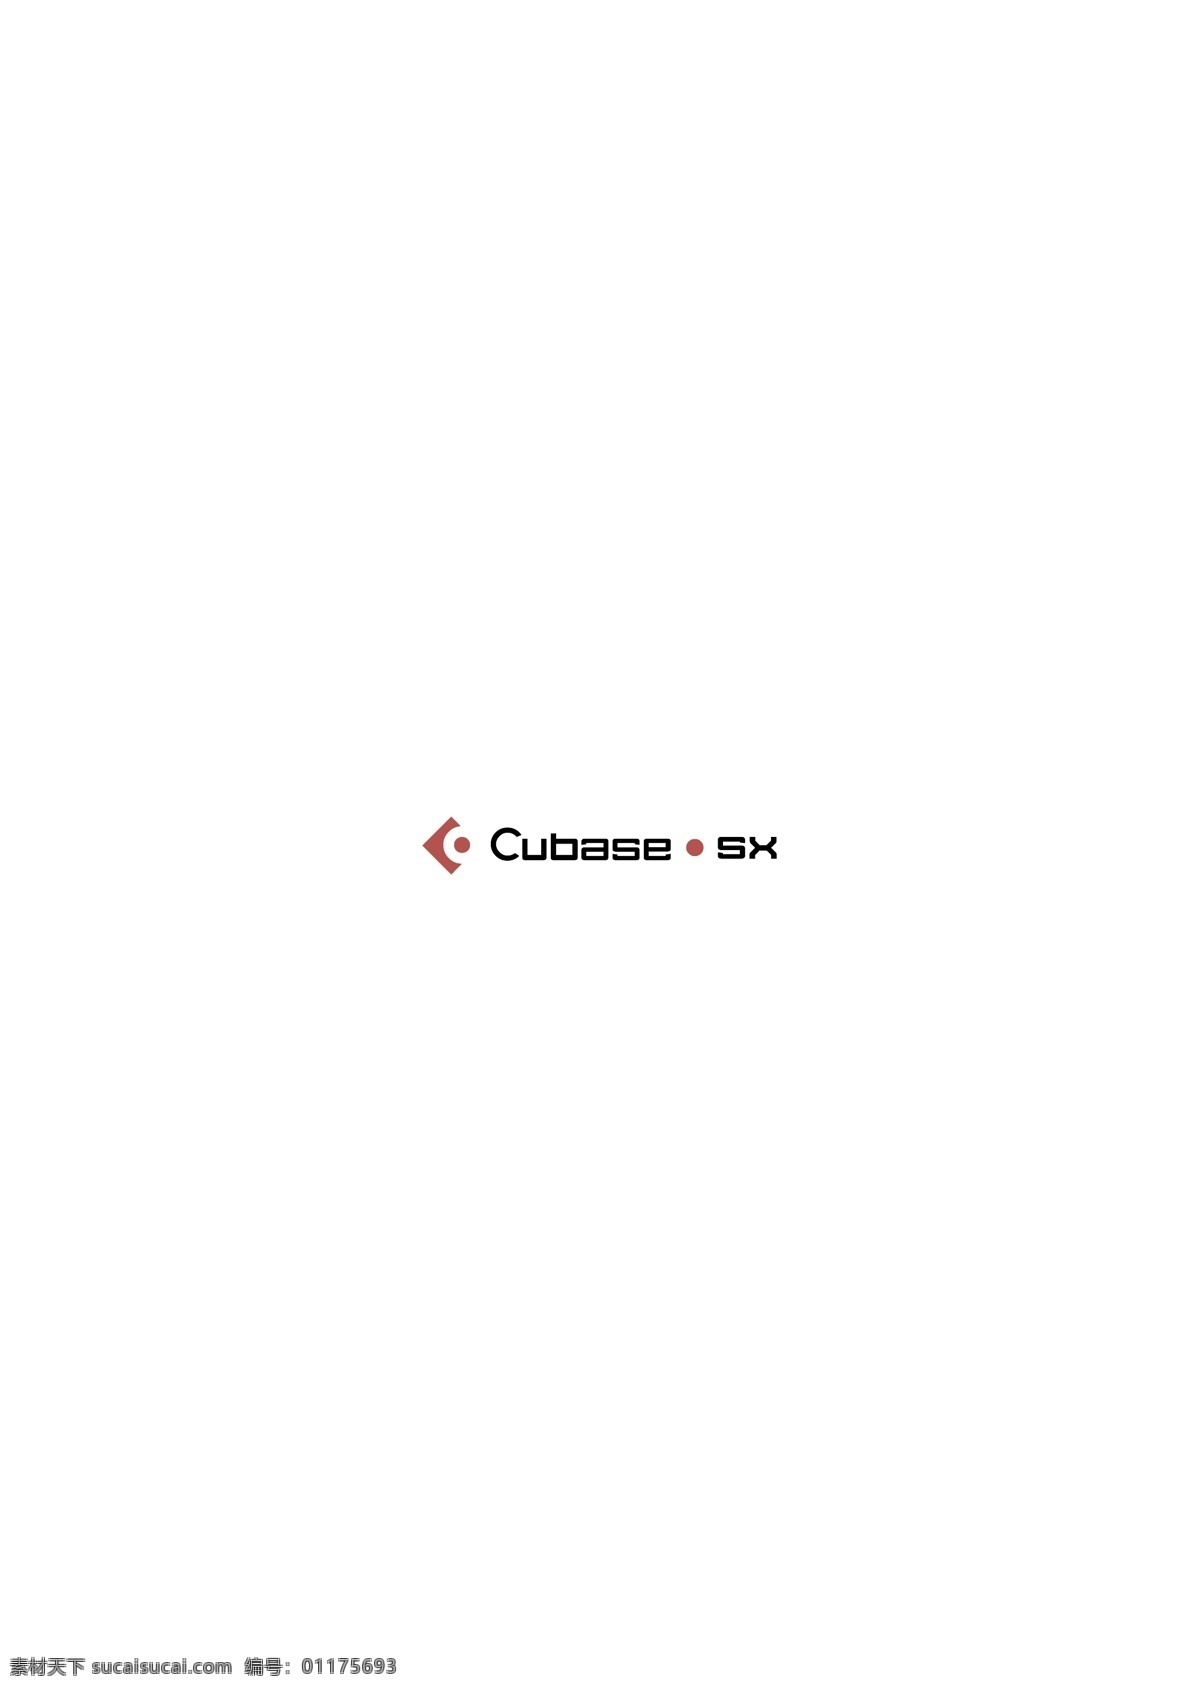 logo大全 logo 设计欣赏 商业矢量 矢量下载 cubasesx 音乐 相关 标志设计 欣赏 网页矢量 矢量图 其他矢量图